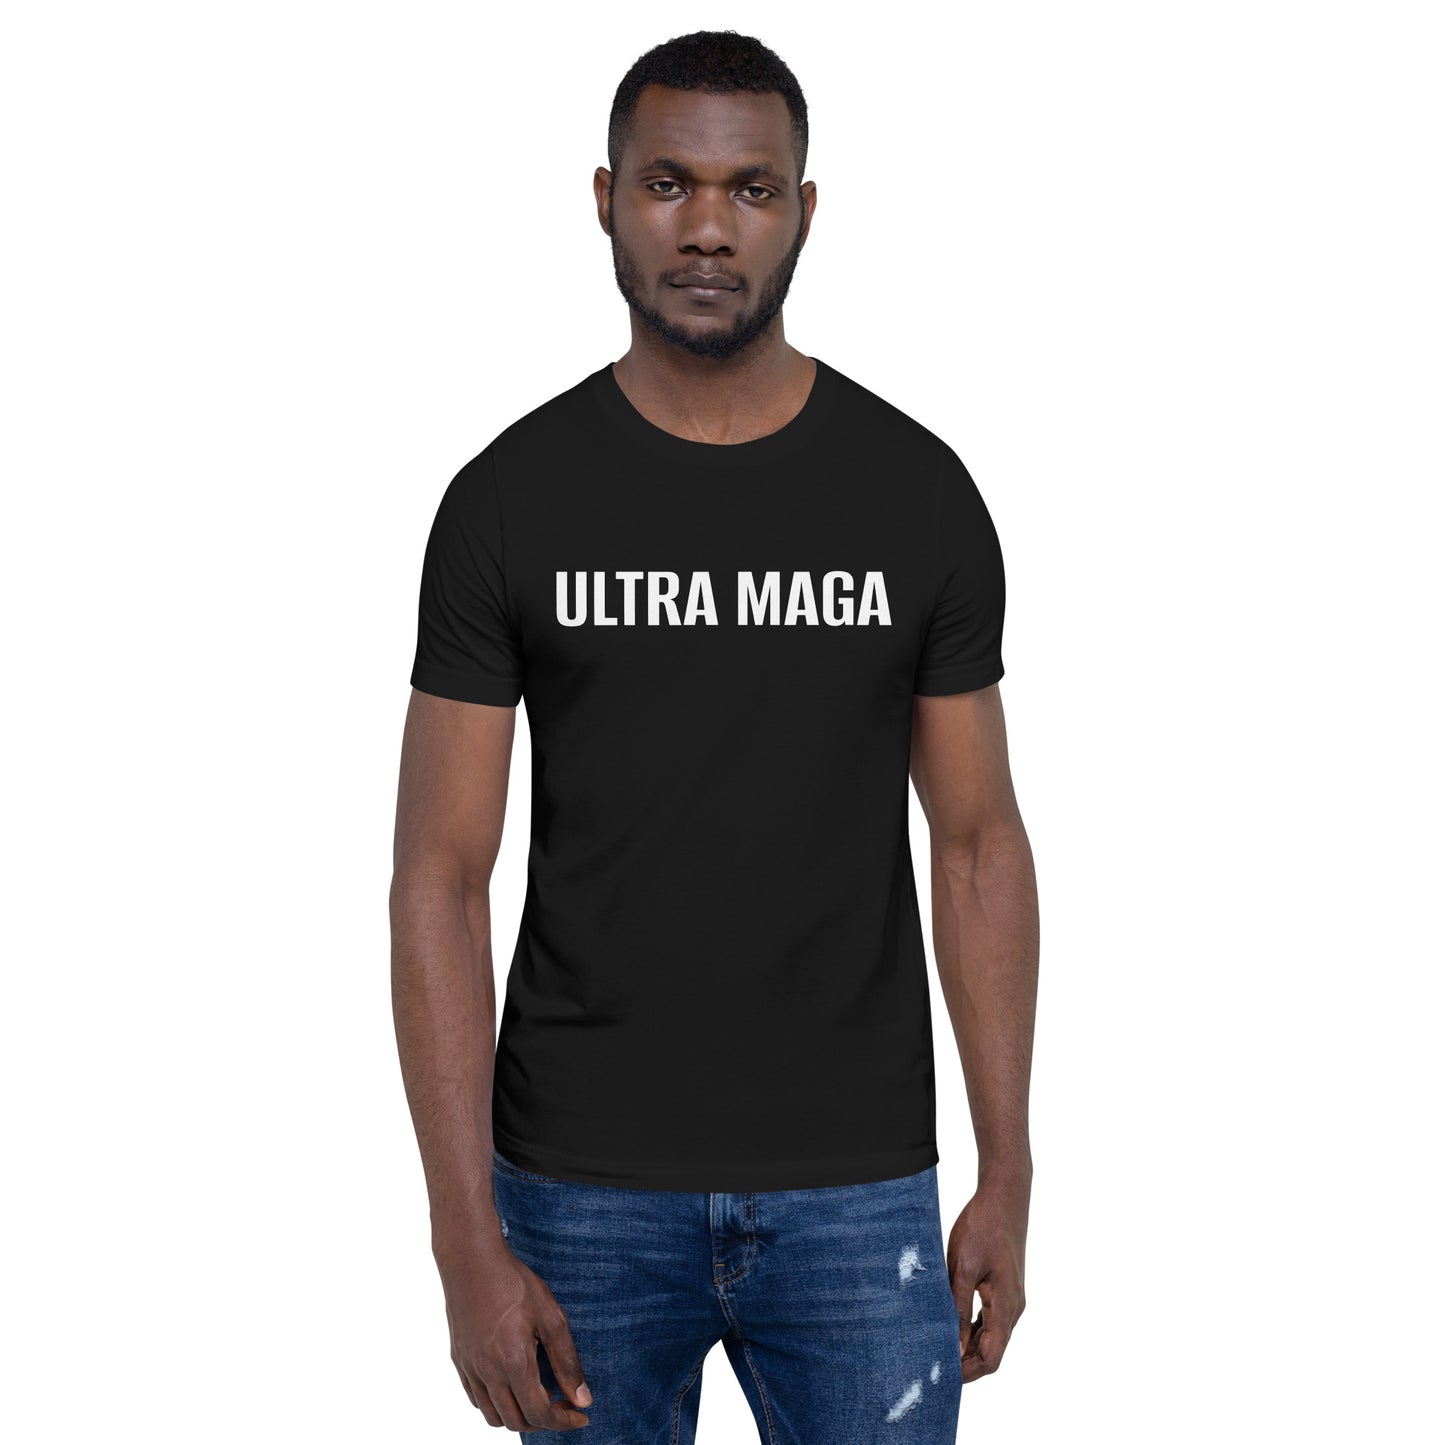 ULTRA MAGA Unisex t-shirt